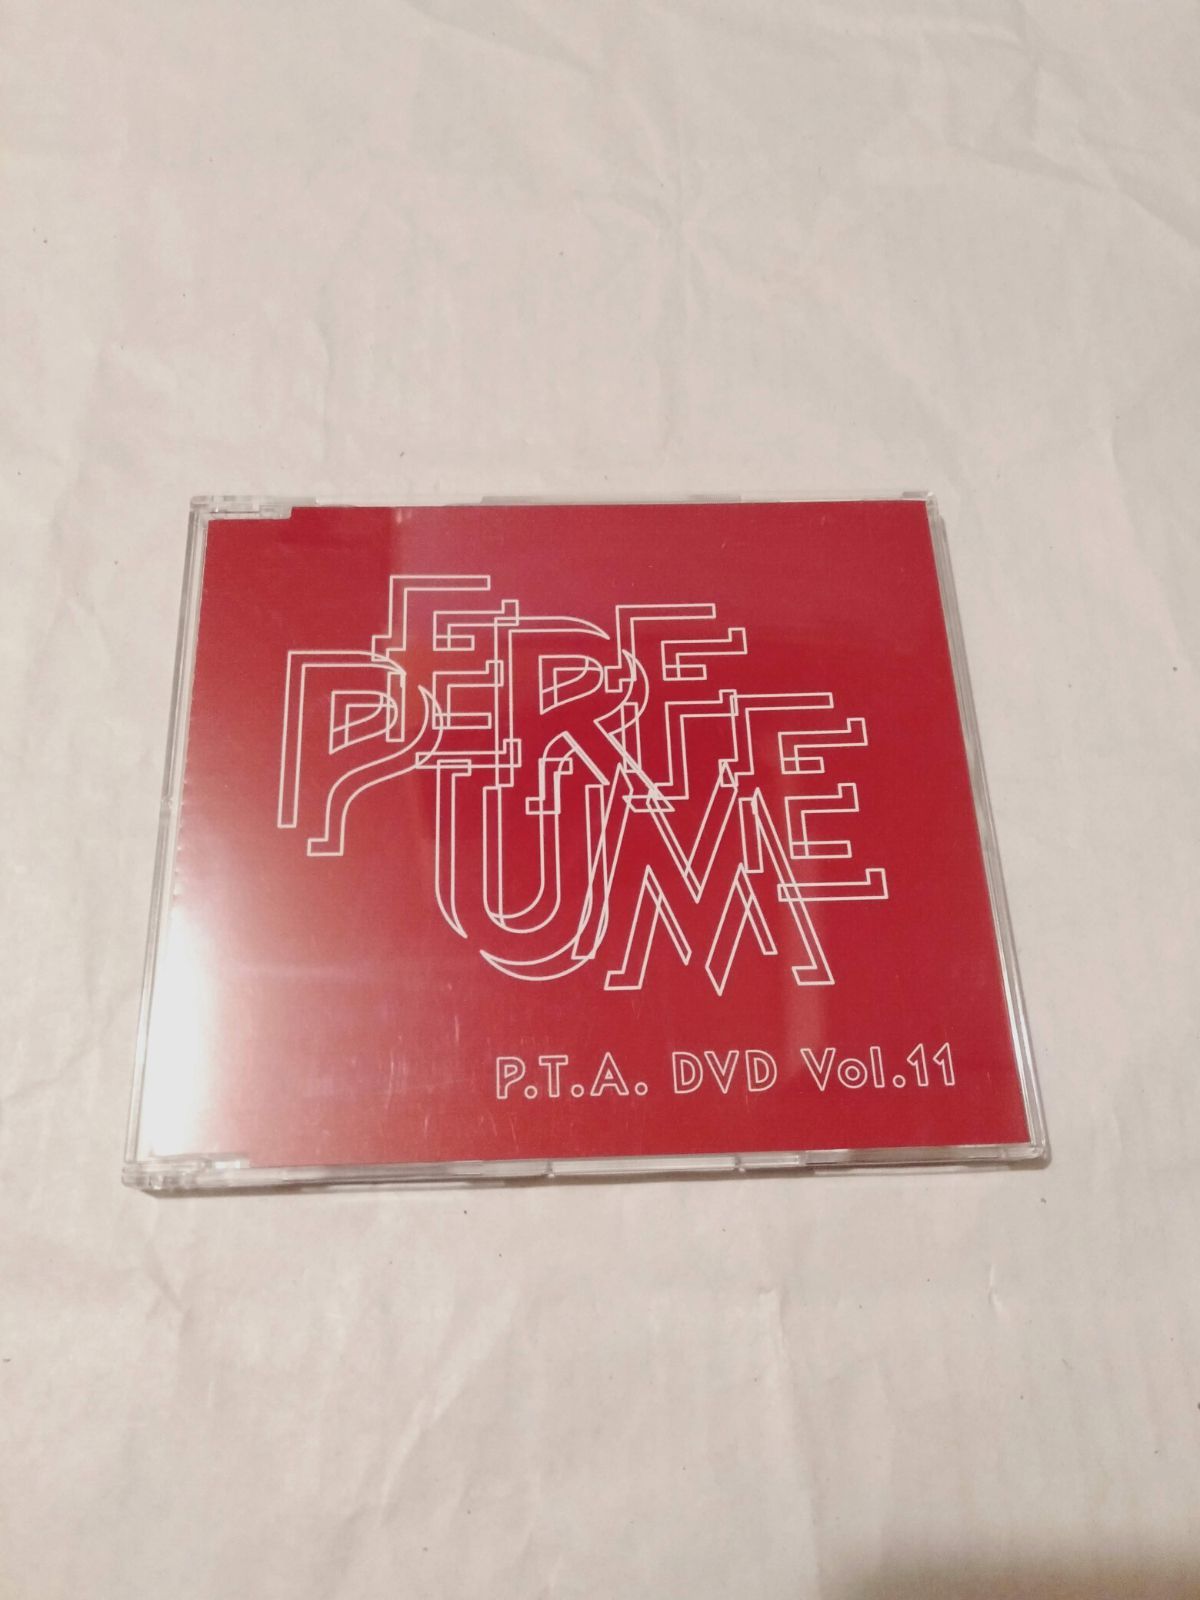 Perfume P.T.A. DVD Vol.11 - ブルーレイ